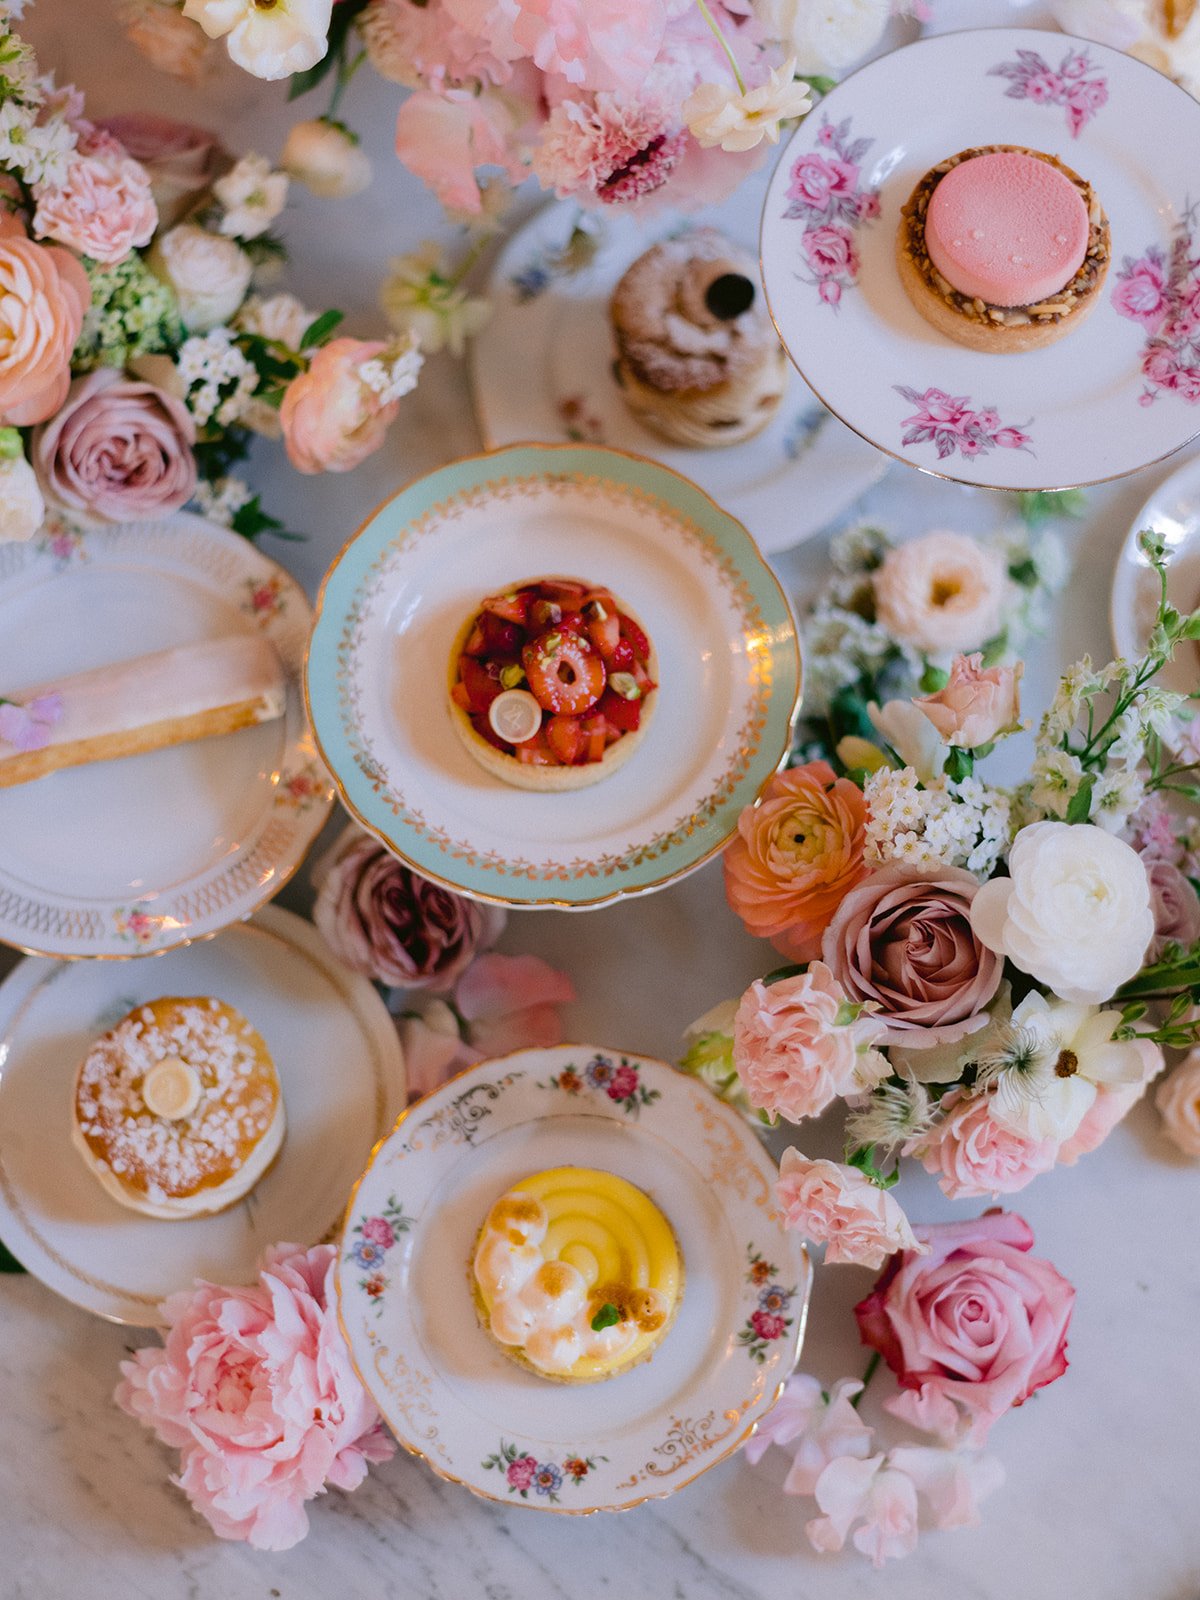 Wedding-dessert-buffet-small-bites-selection-of-mignardises-wedding-catering.jpg